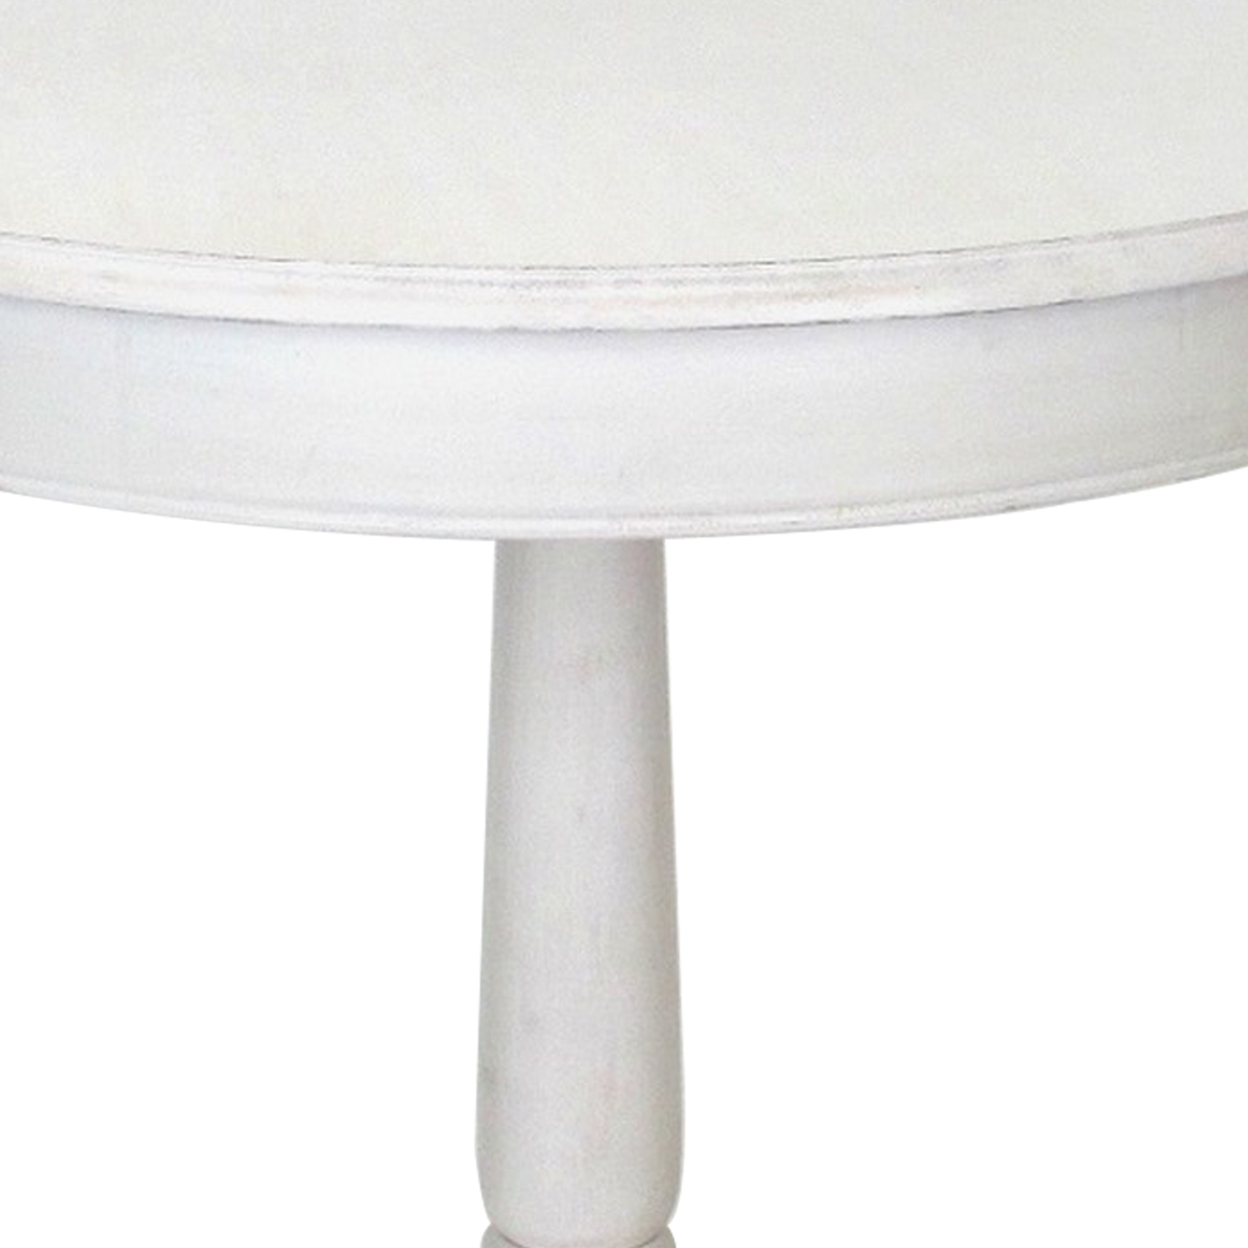 Wooden Column Table With Turned Pedestal Legs, White- Saltoro Sherpi